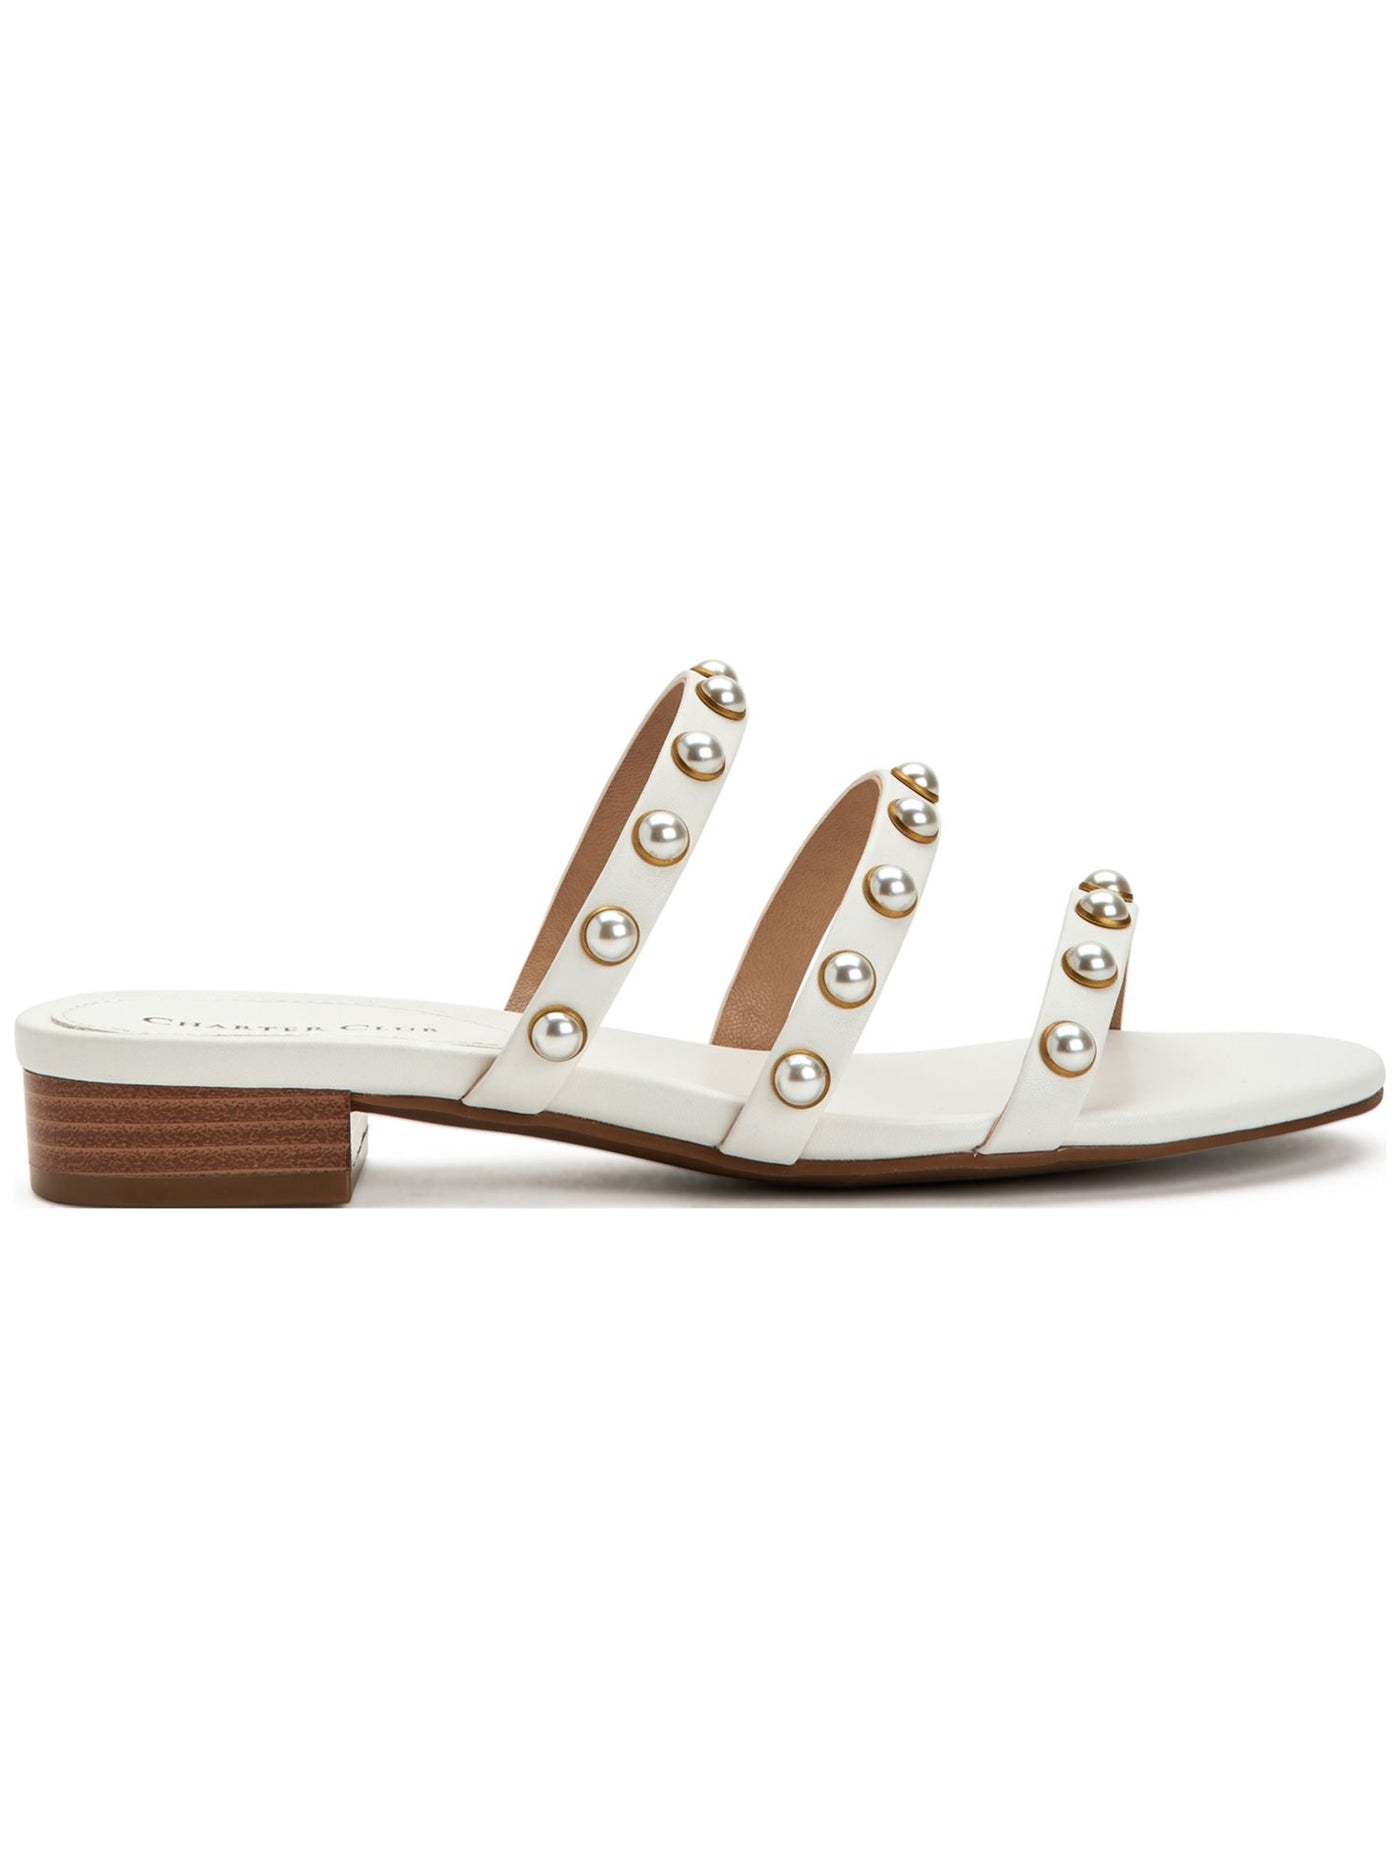 CHARTER CLUB Womens White Imitation Pearls Strappy Soraya Almond Toe Slip On Sandals Shoes 7.5 M